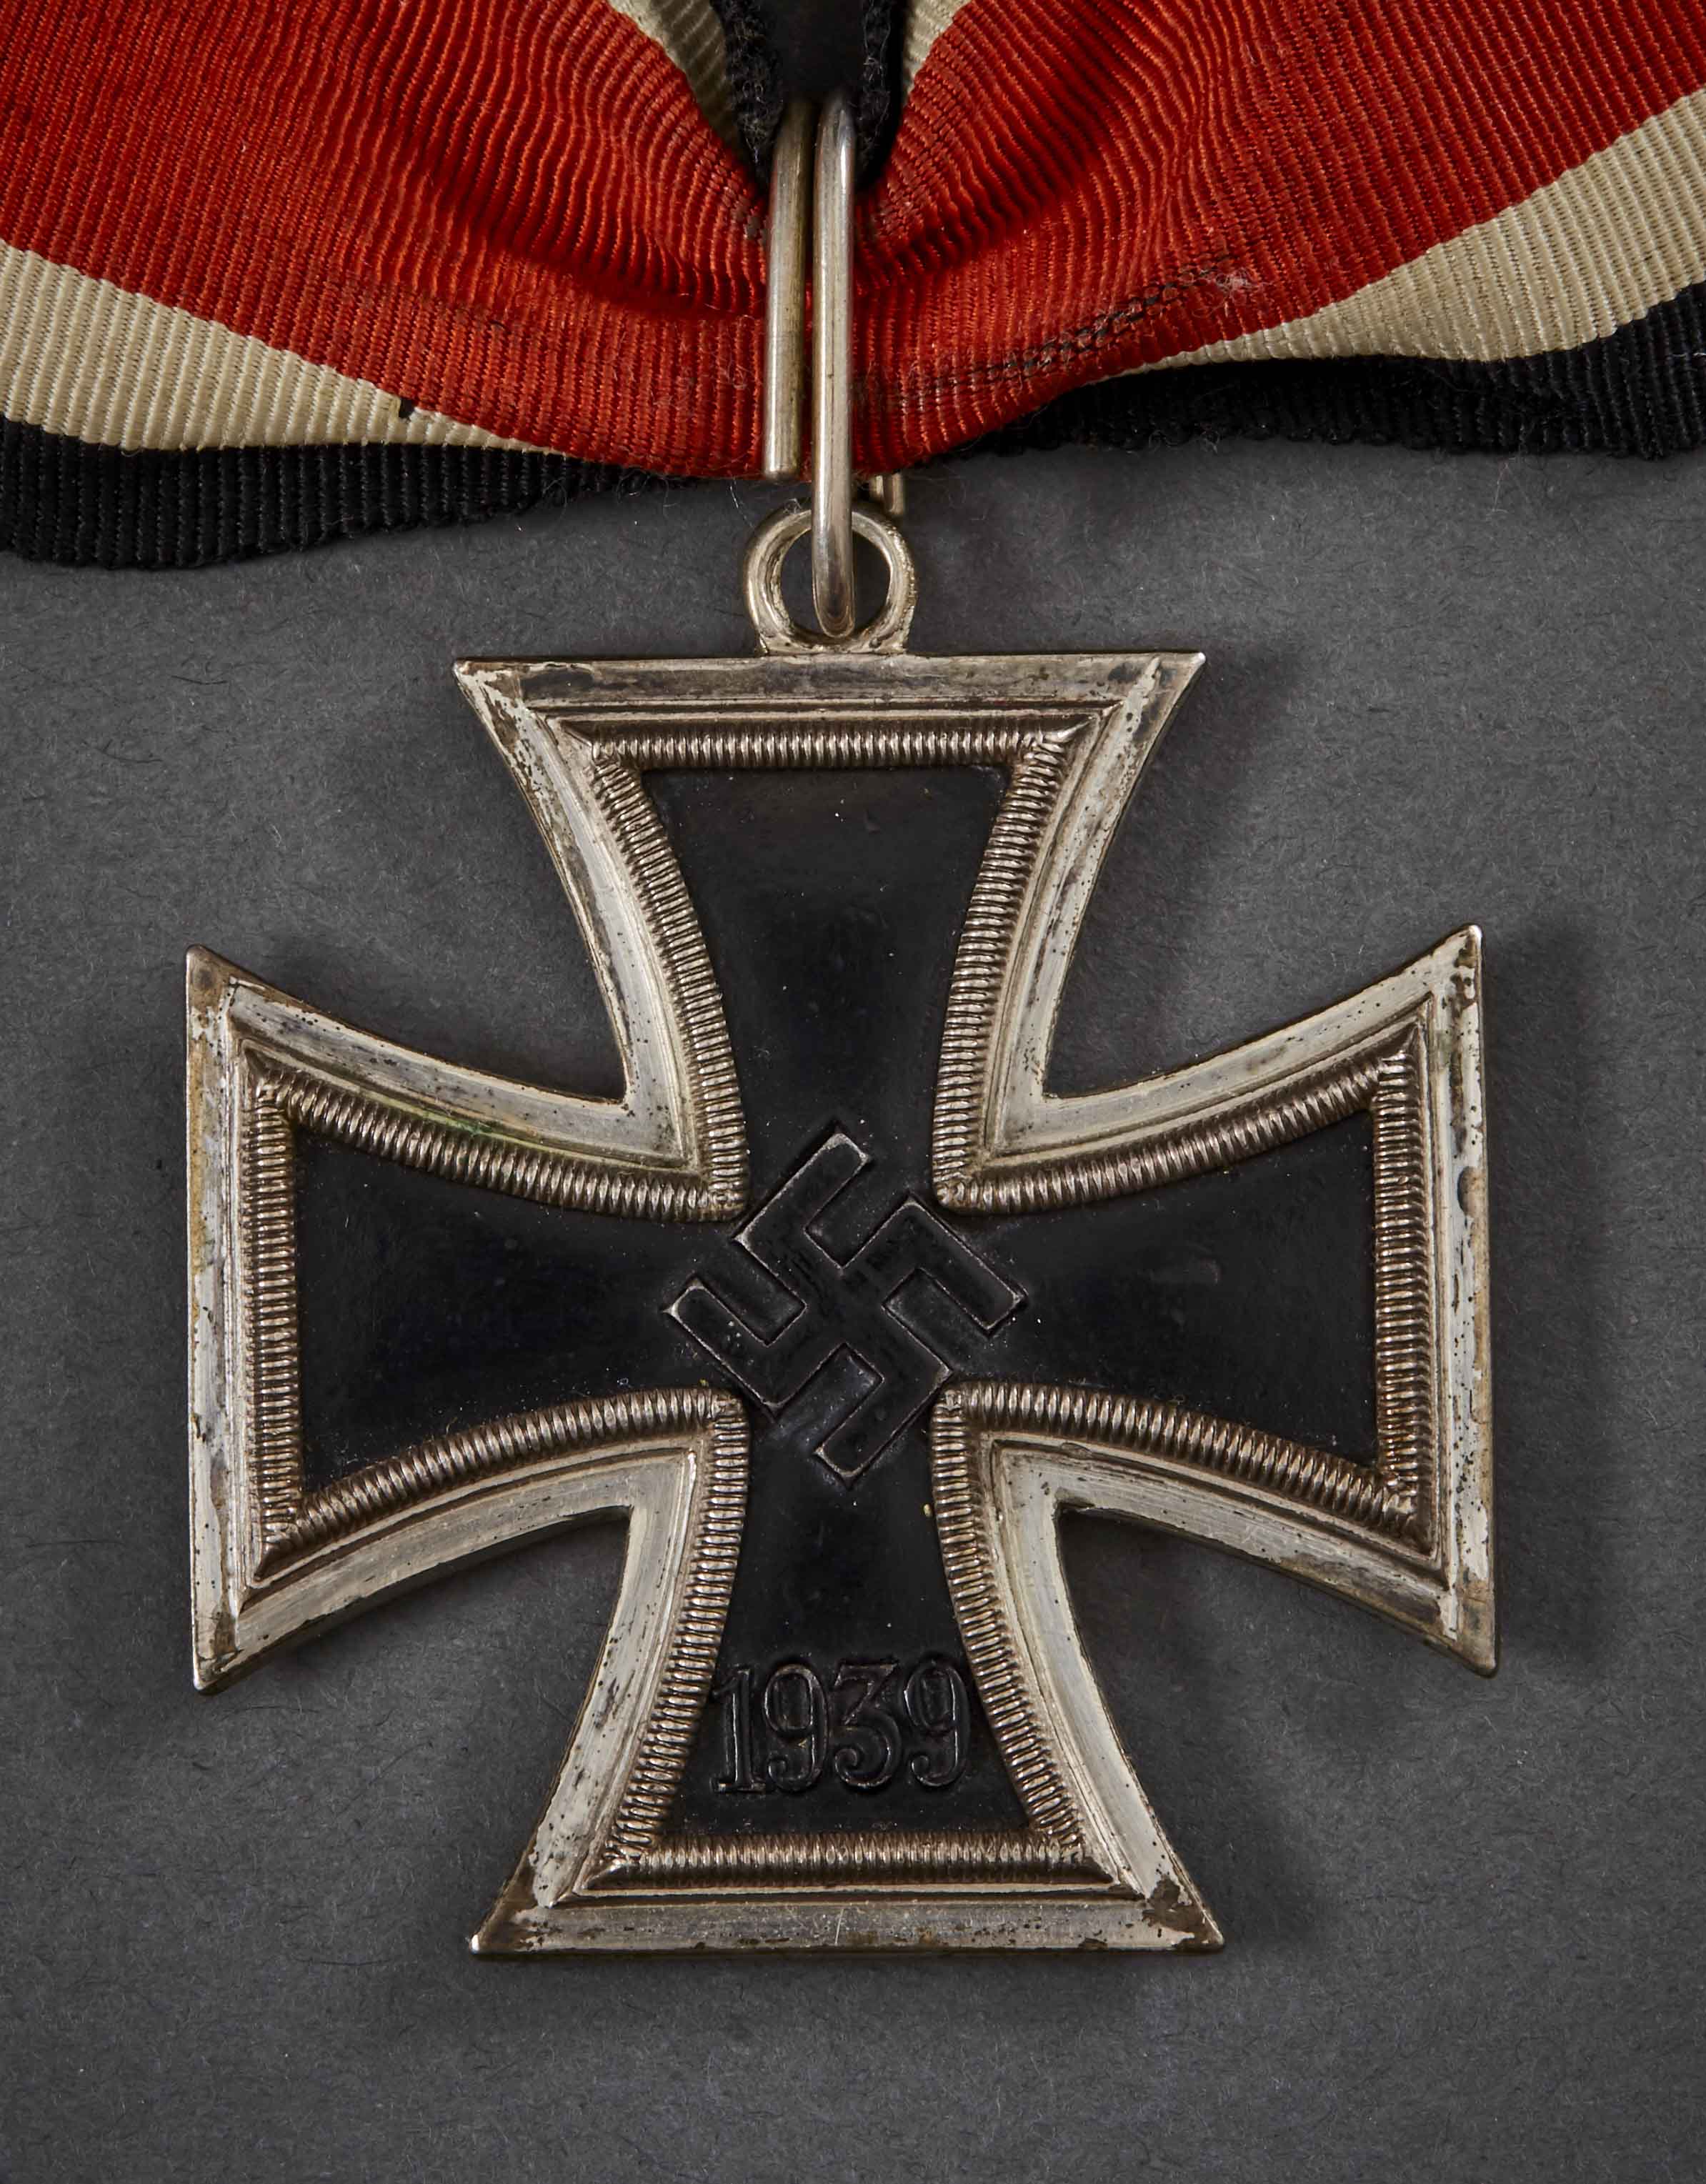 Knights Cross of the Iron Cross 1939 by Juncker